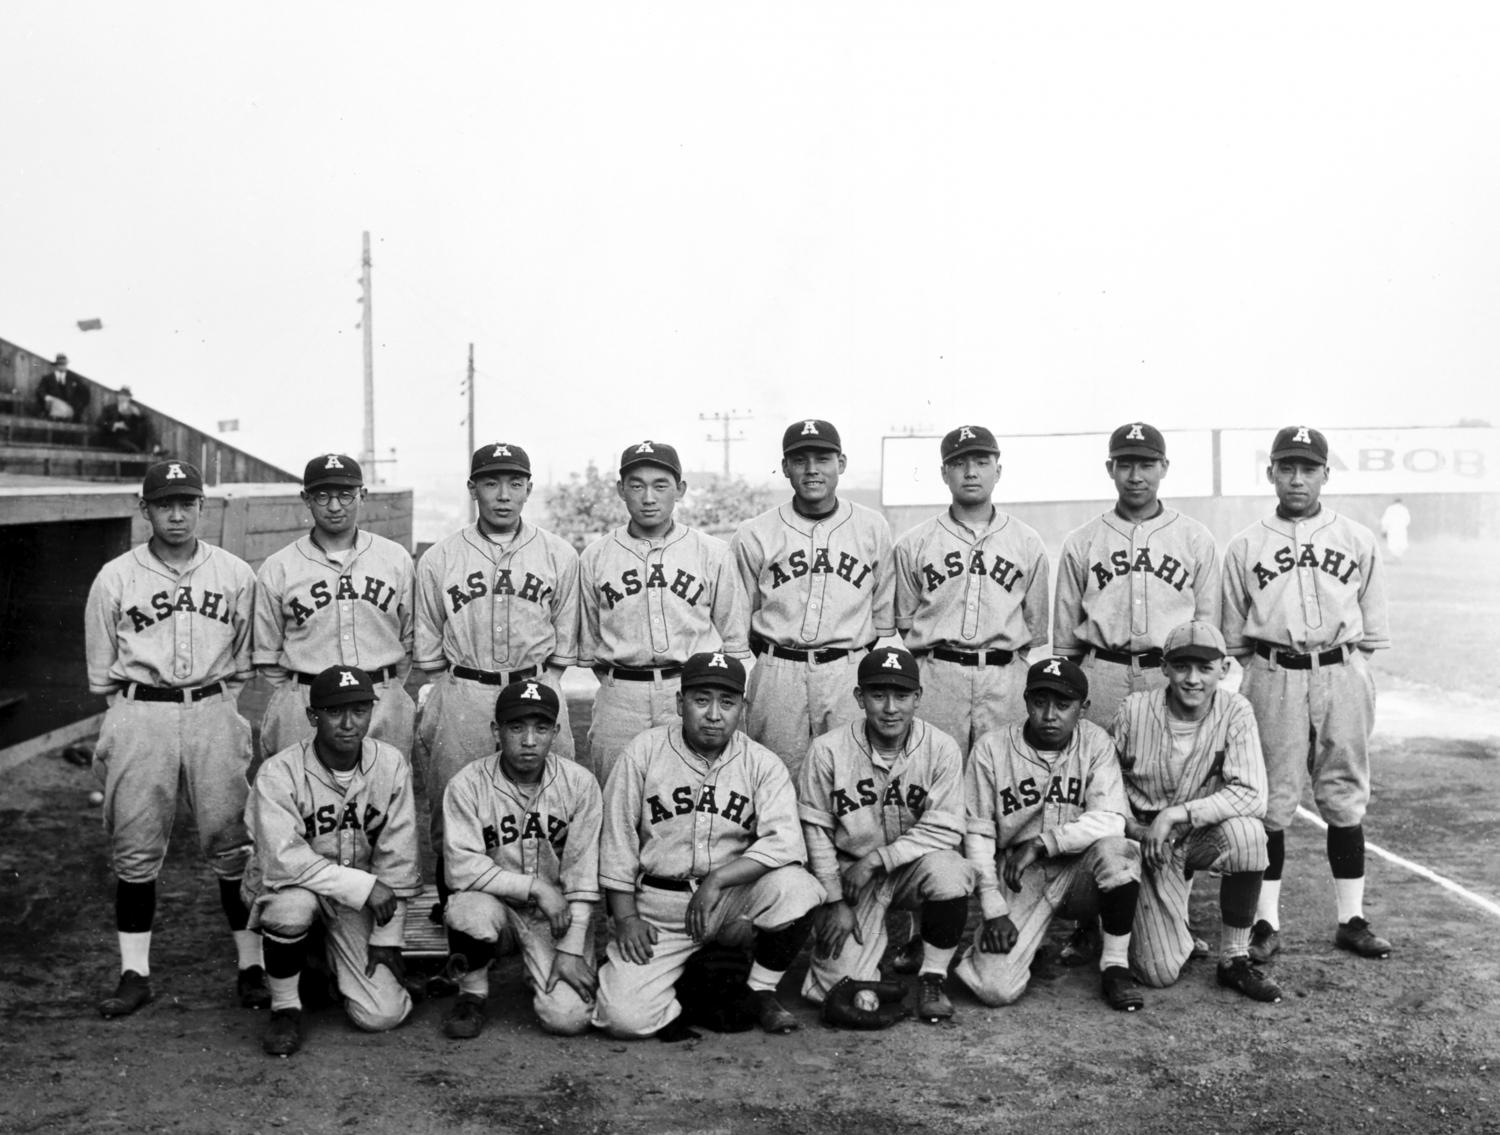 Team photo of Asahi baseball team in 1929.